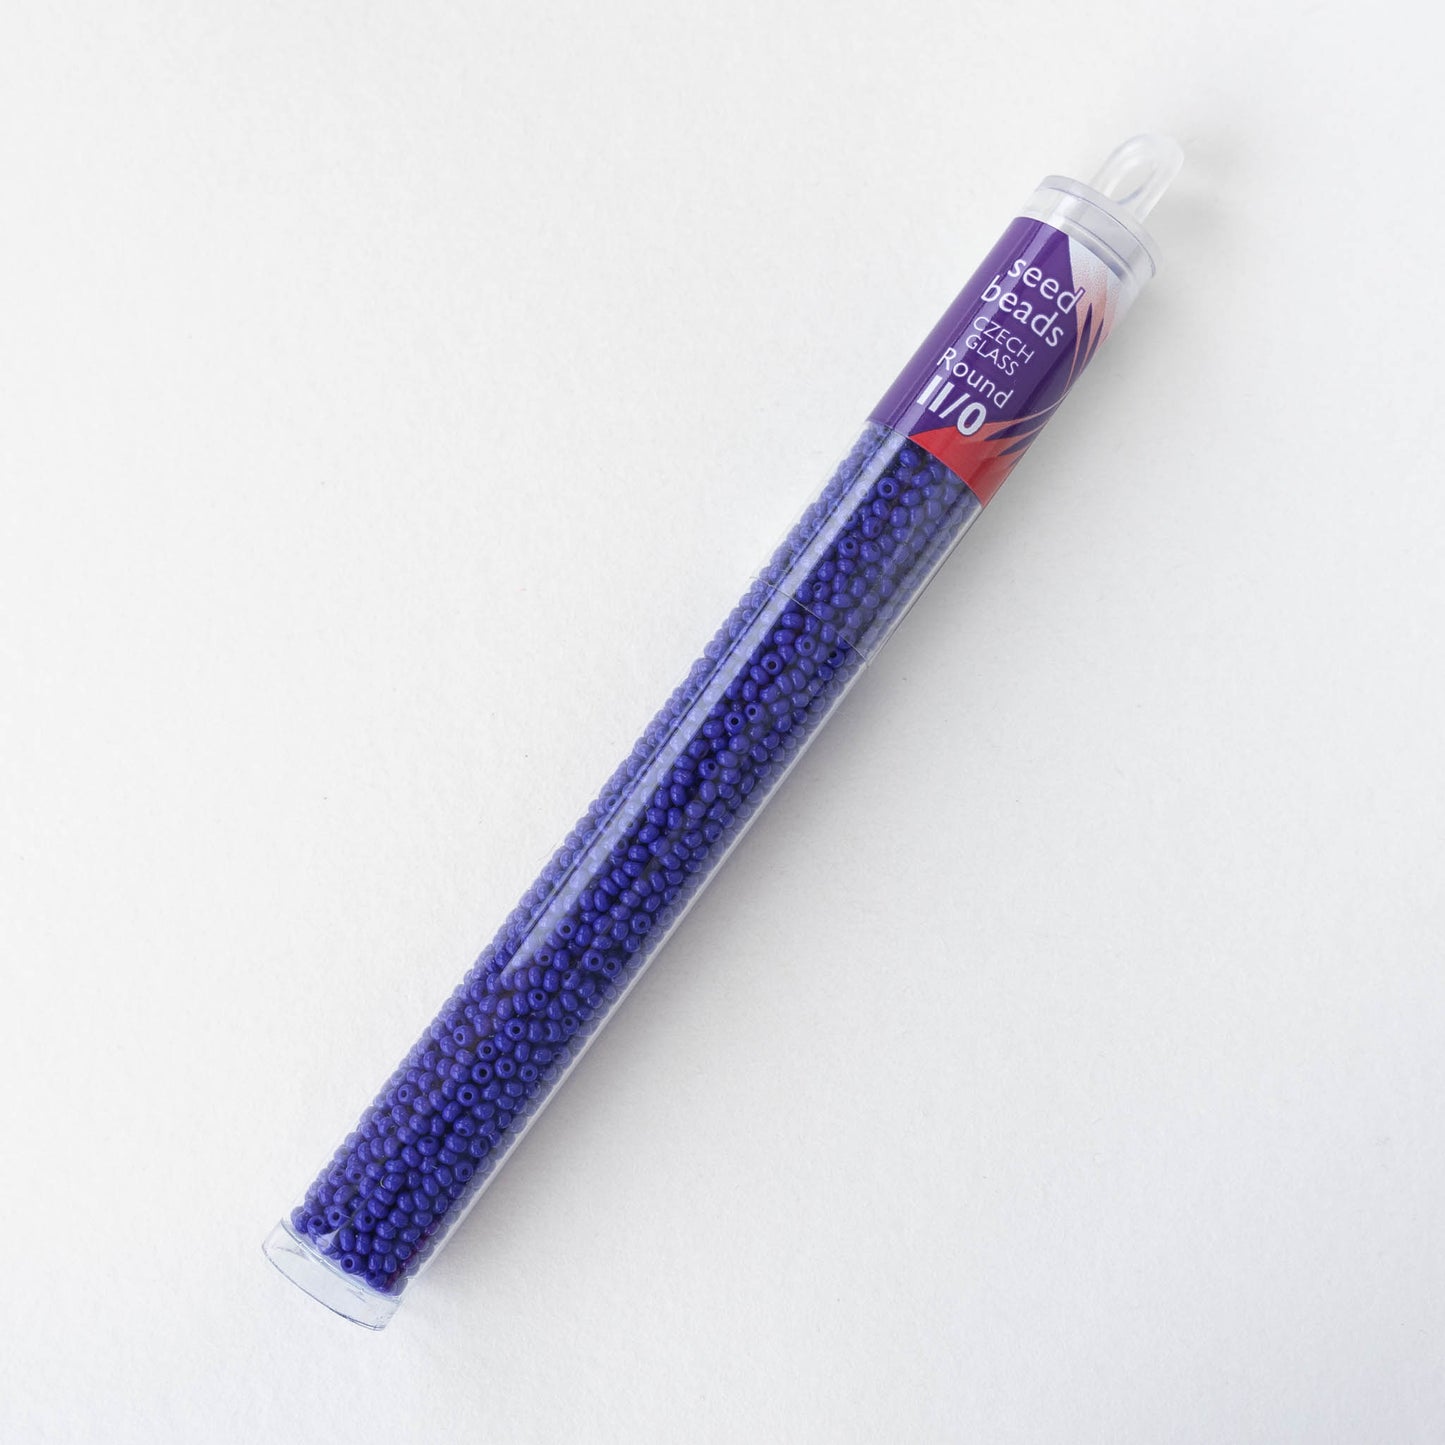 11/0 Seed Beads - Opaque Cobalt Blue - 24 gram Tube